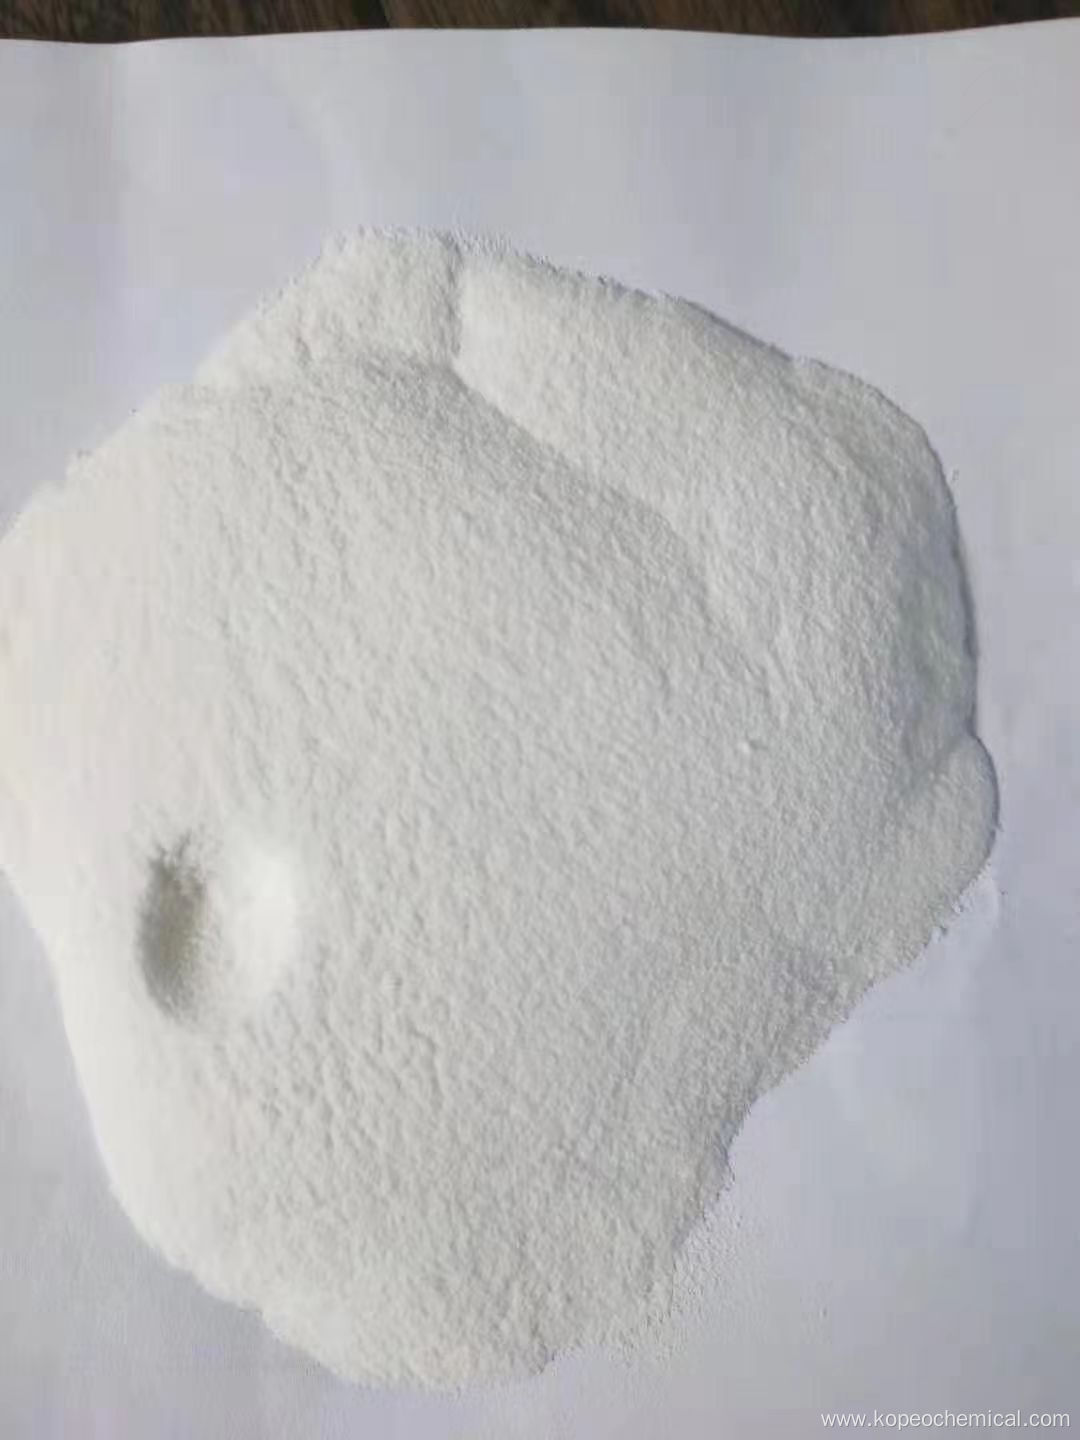 Aluminium Sulfate Powder for Medicine and Industry